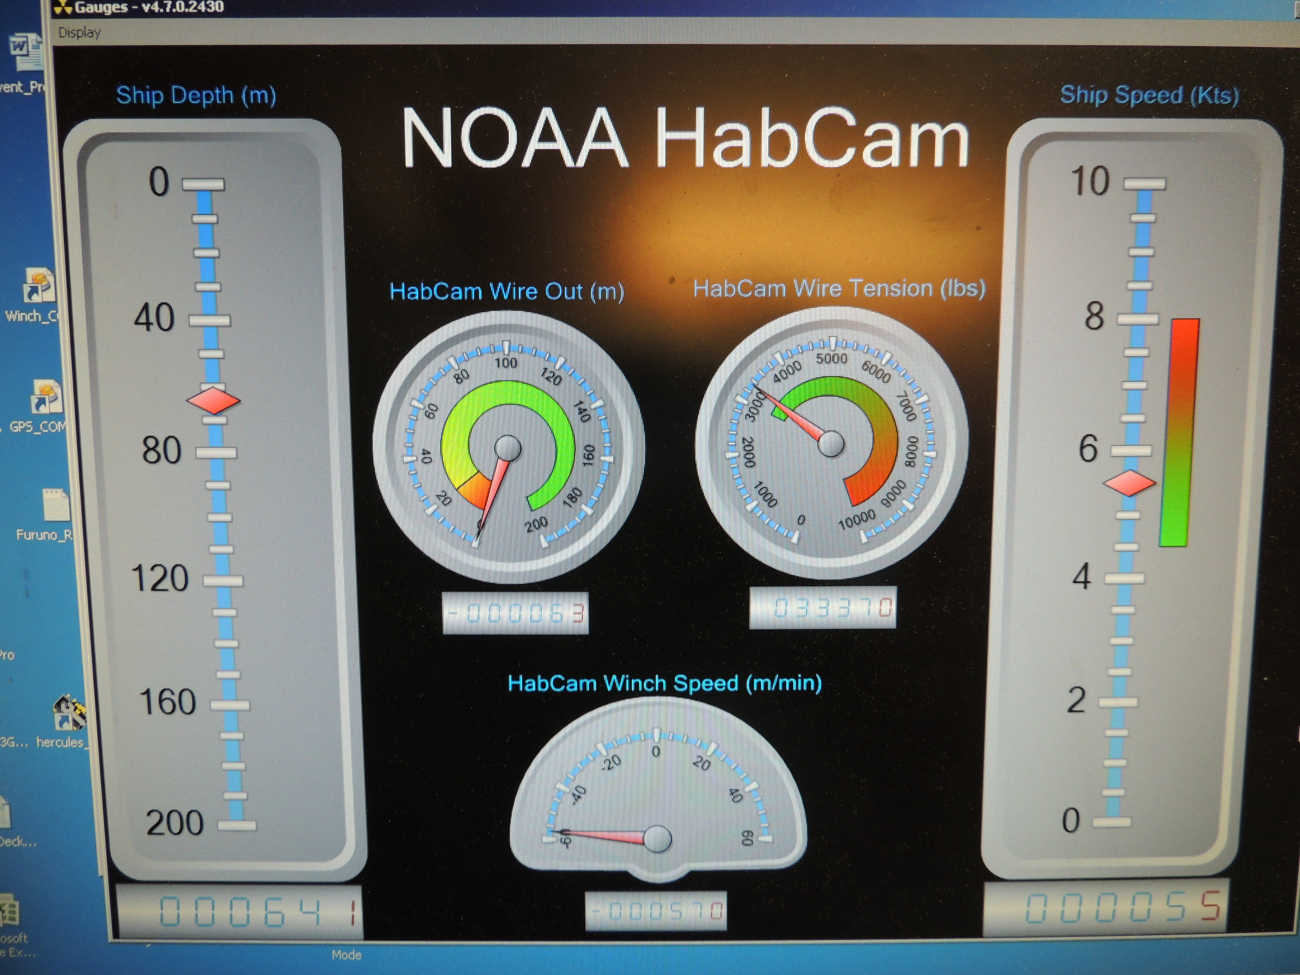 The NOAA HabCam winch monitor display